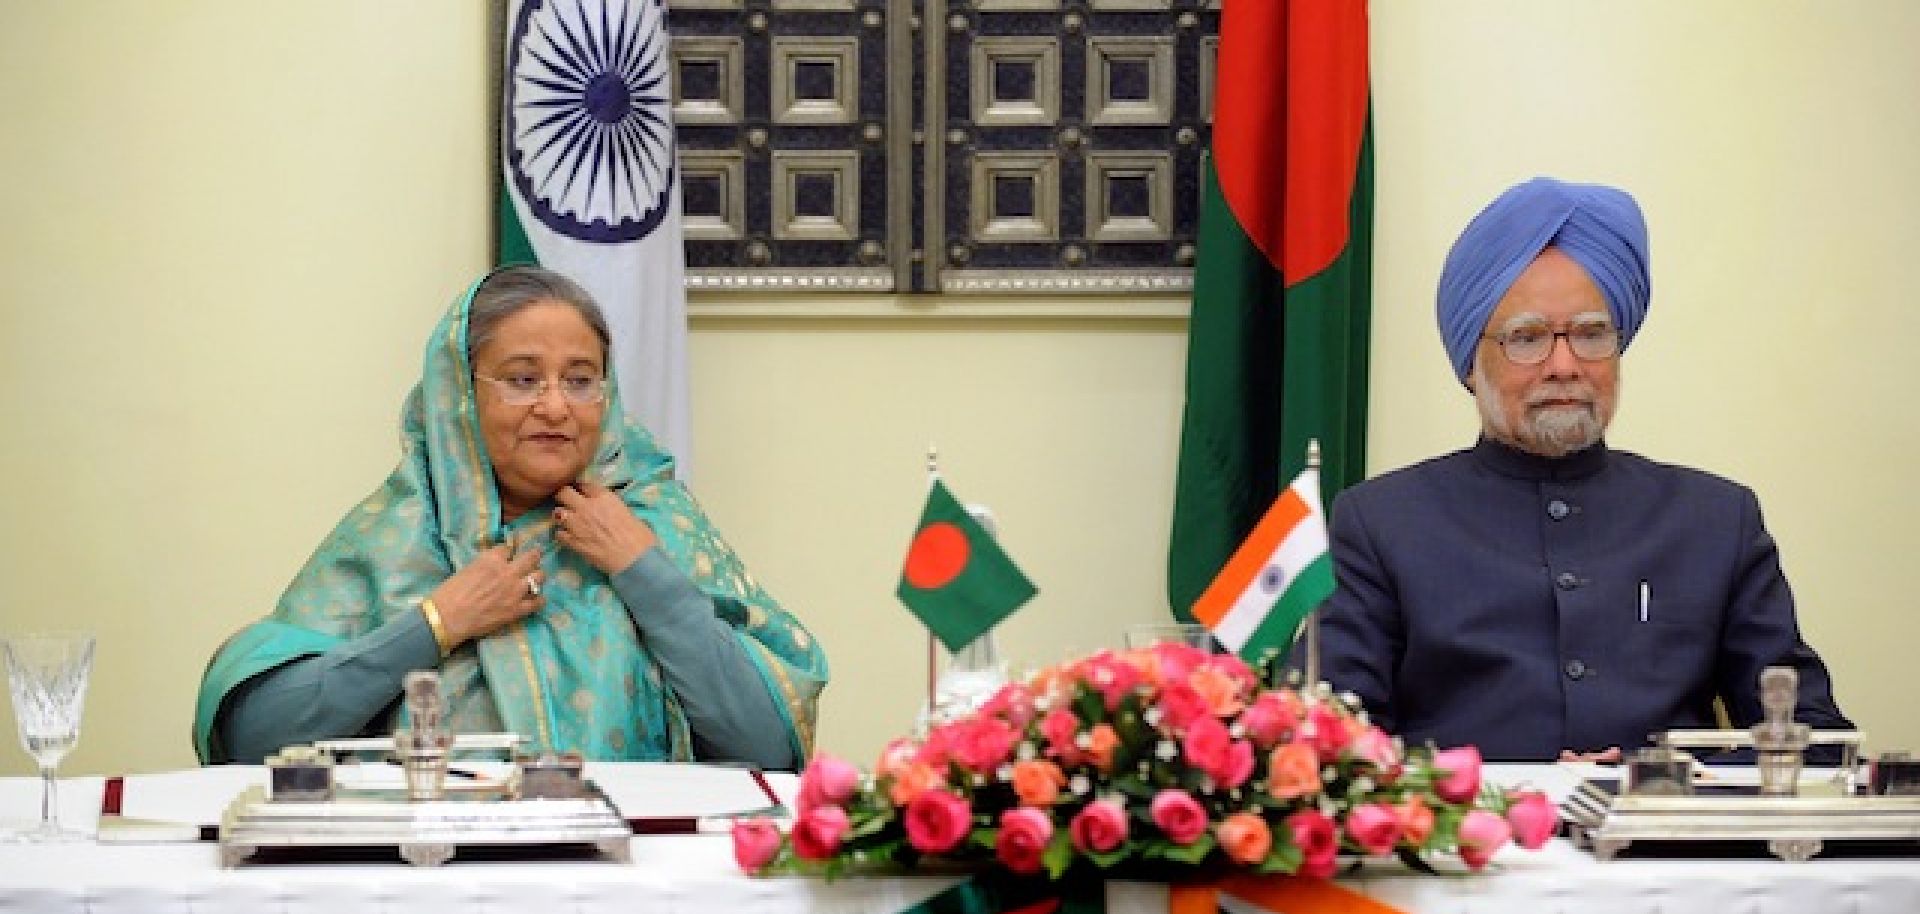 India: Border Disputes, Local Politics and Relations with Bangladesh